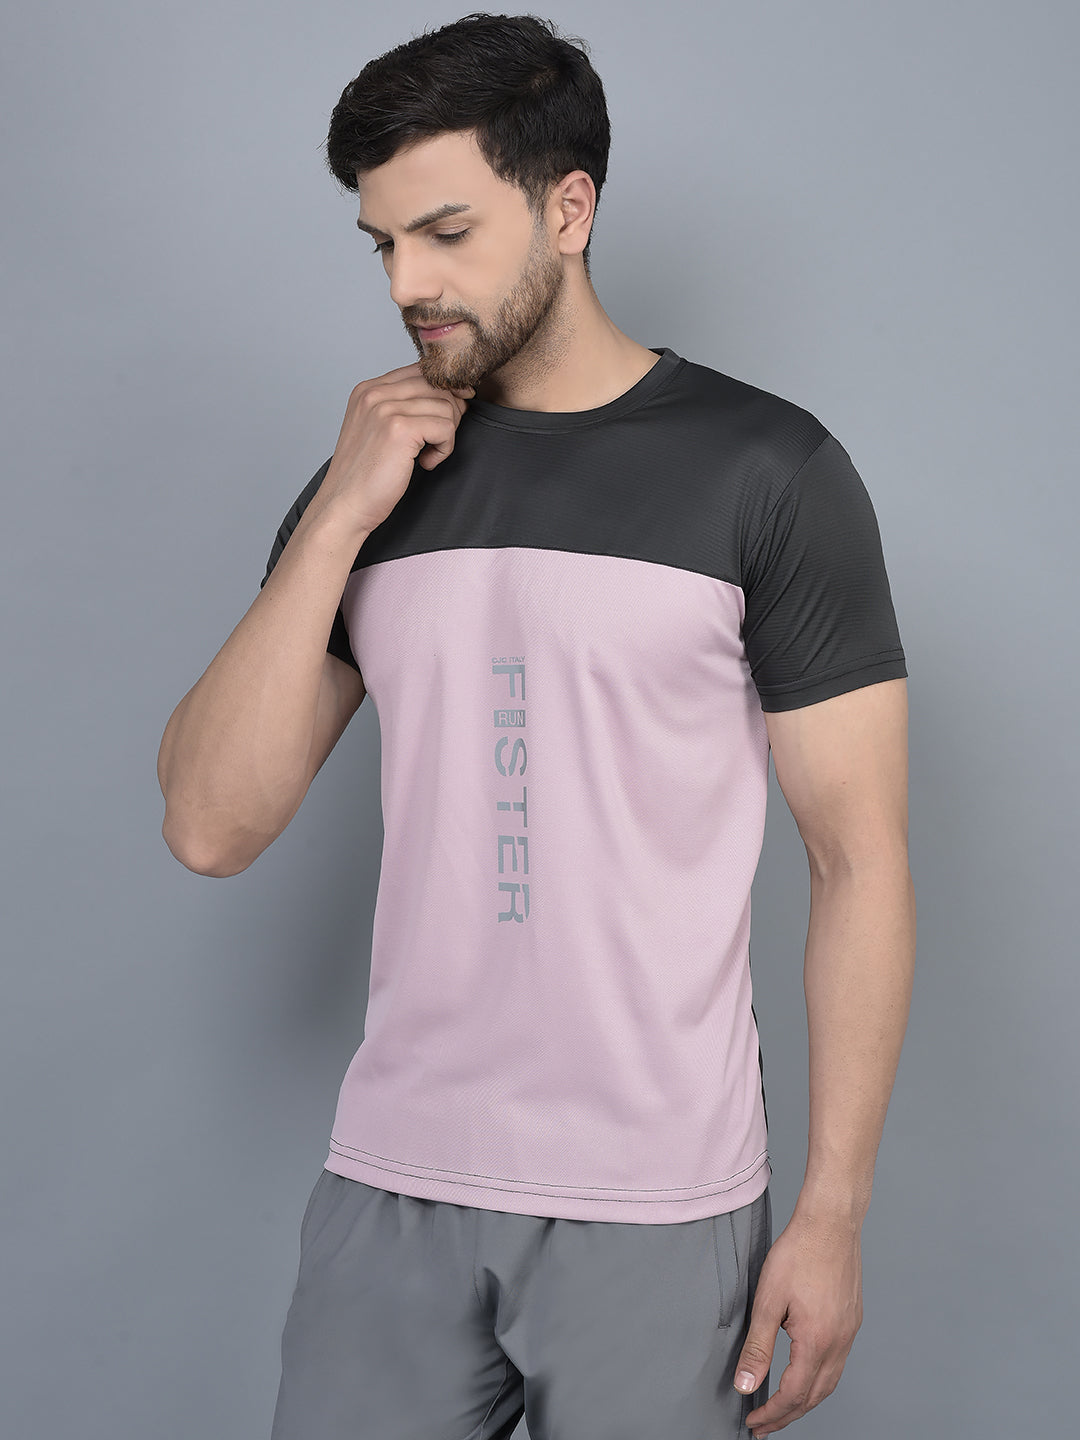 Cobb Light Pink Printed Round Neck T-Shirt